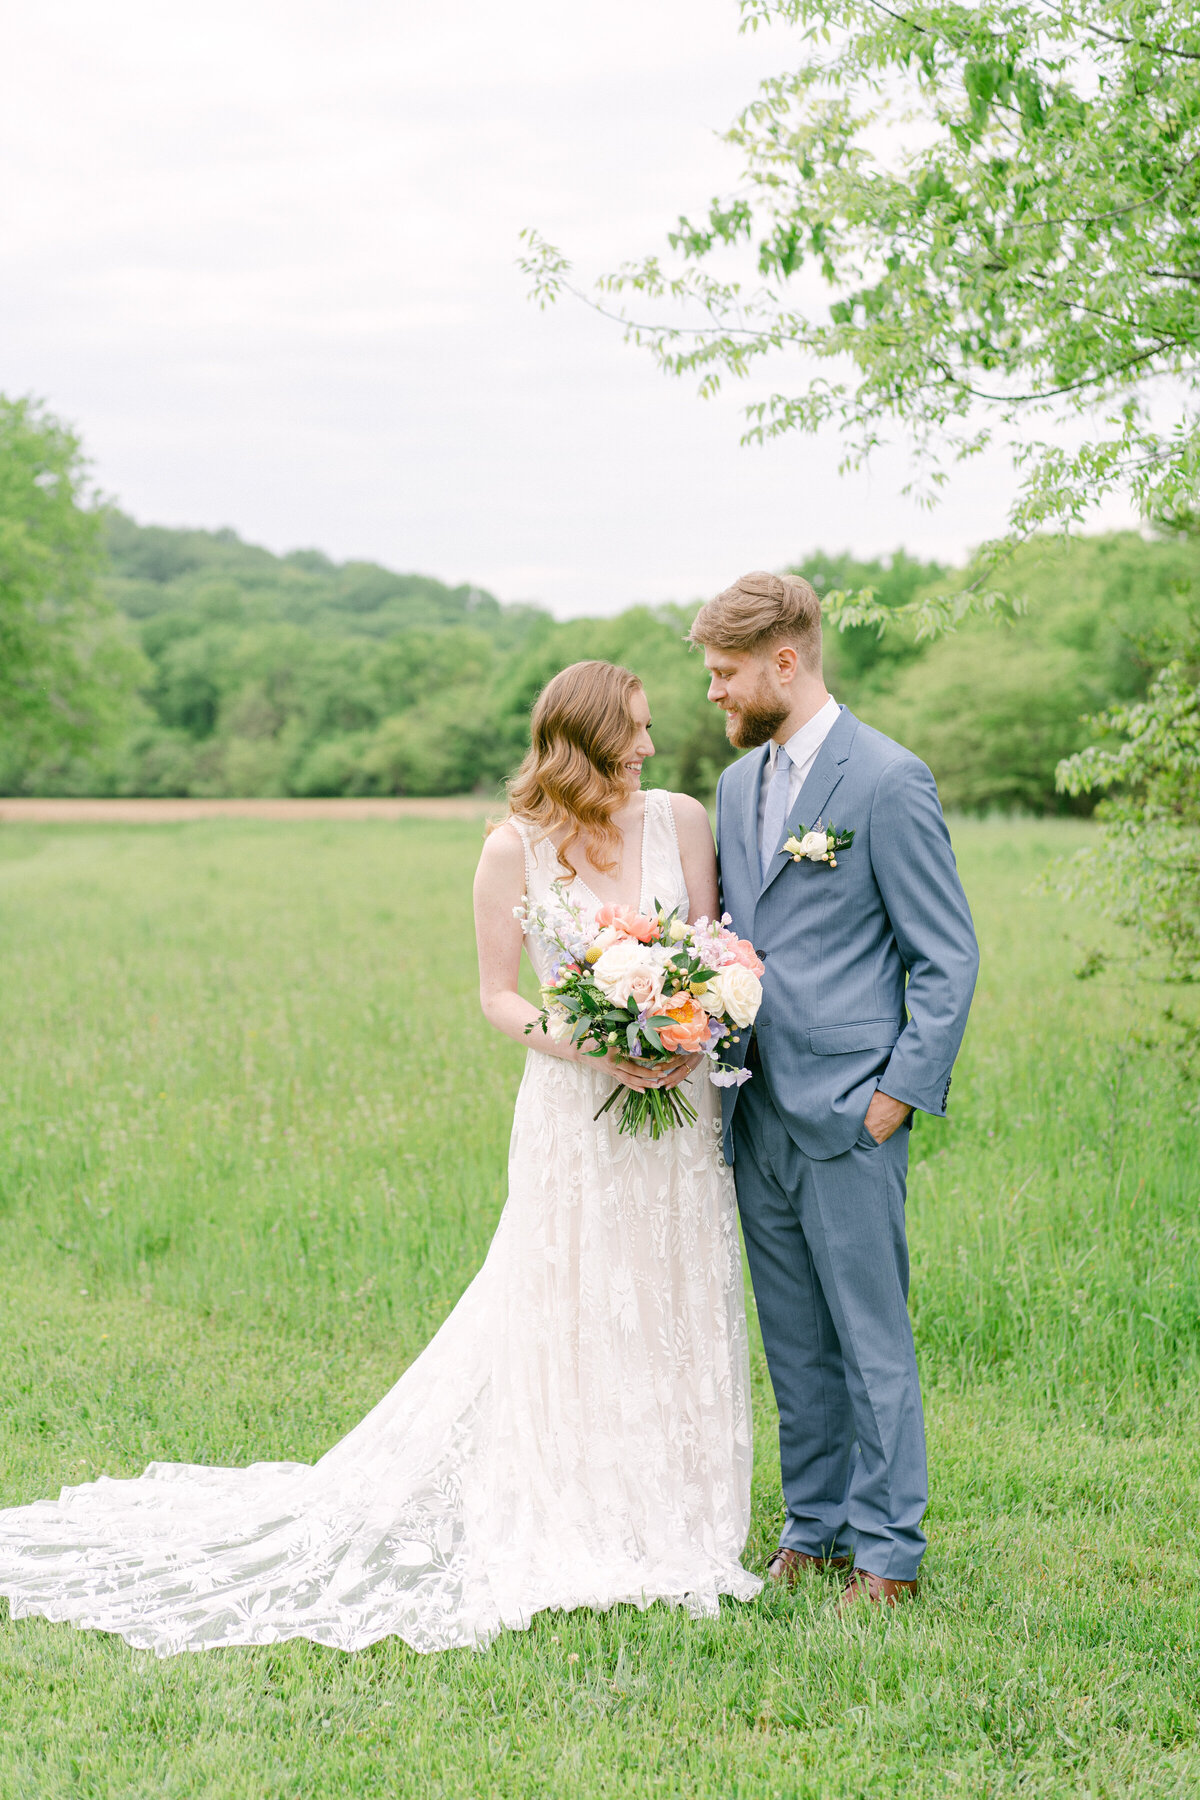 Ava-Vienneau-Nashville-Wedding-Photographer-Southall-Meadows-52